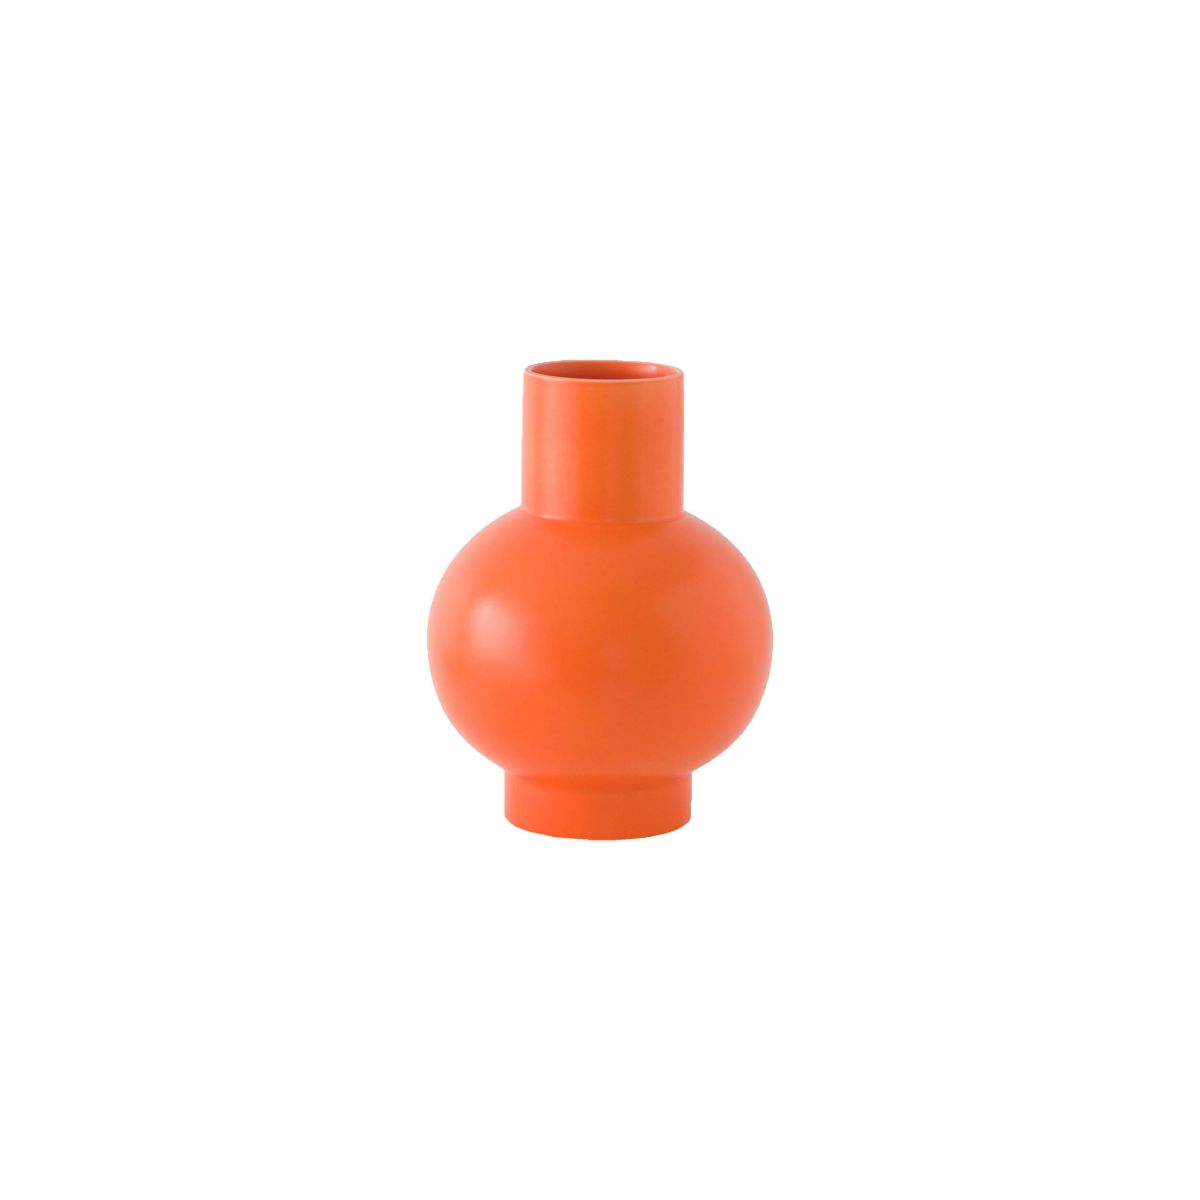 Strom Vase Small - Vibrant Orange